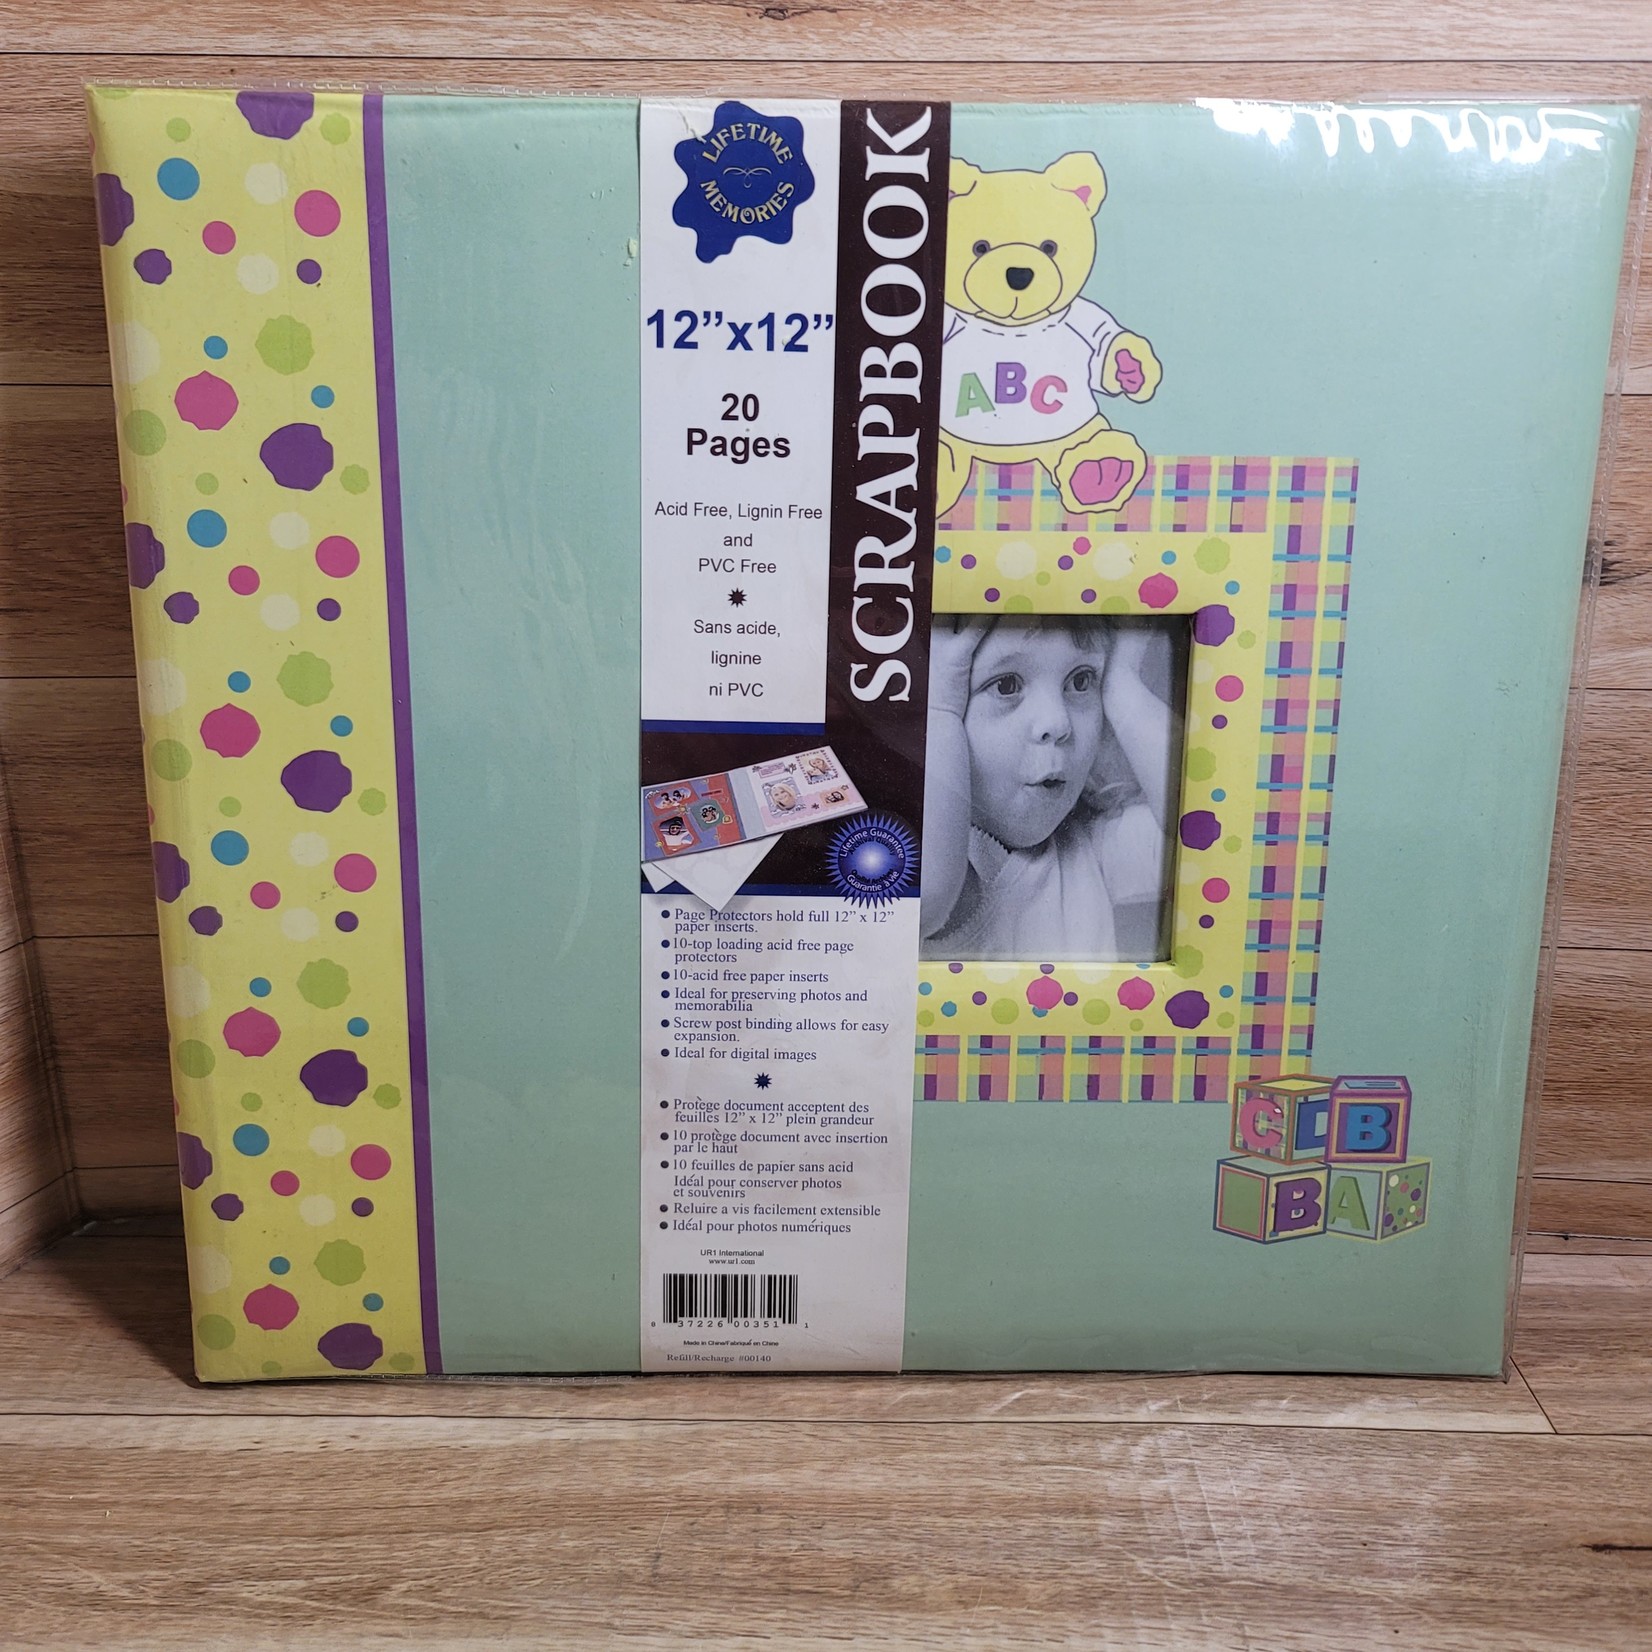 12" x 12" Scrapbook Album - ABC Blocks with Window